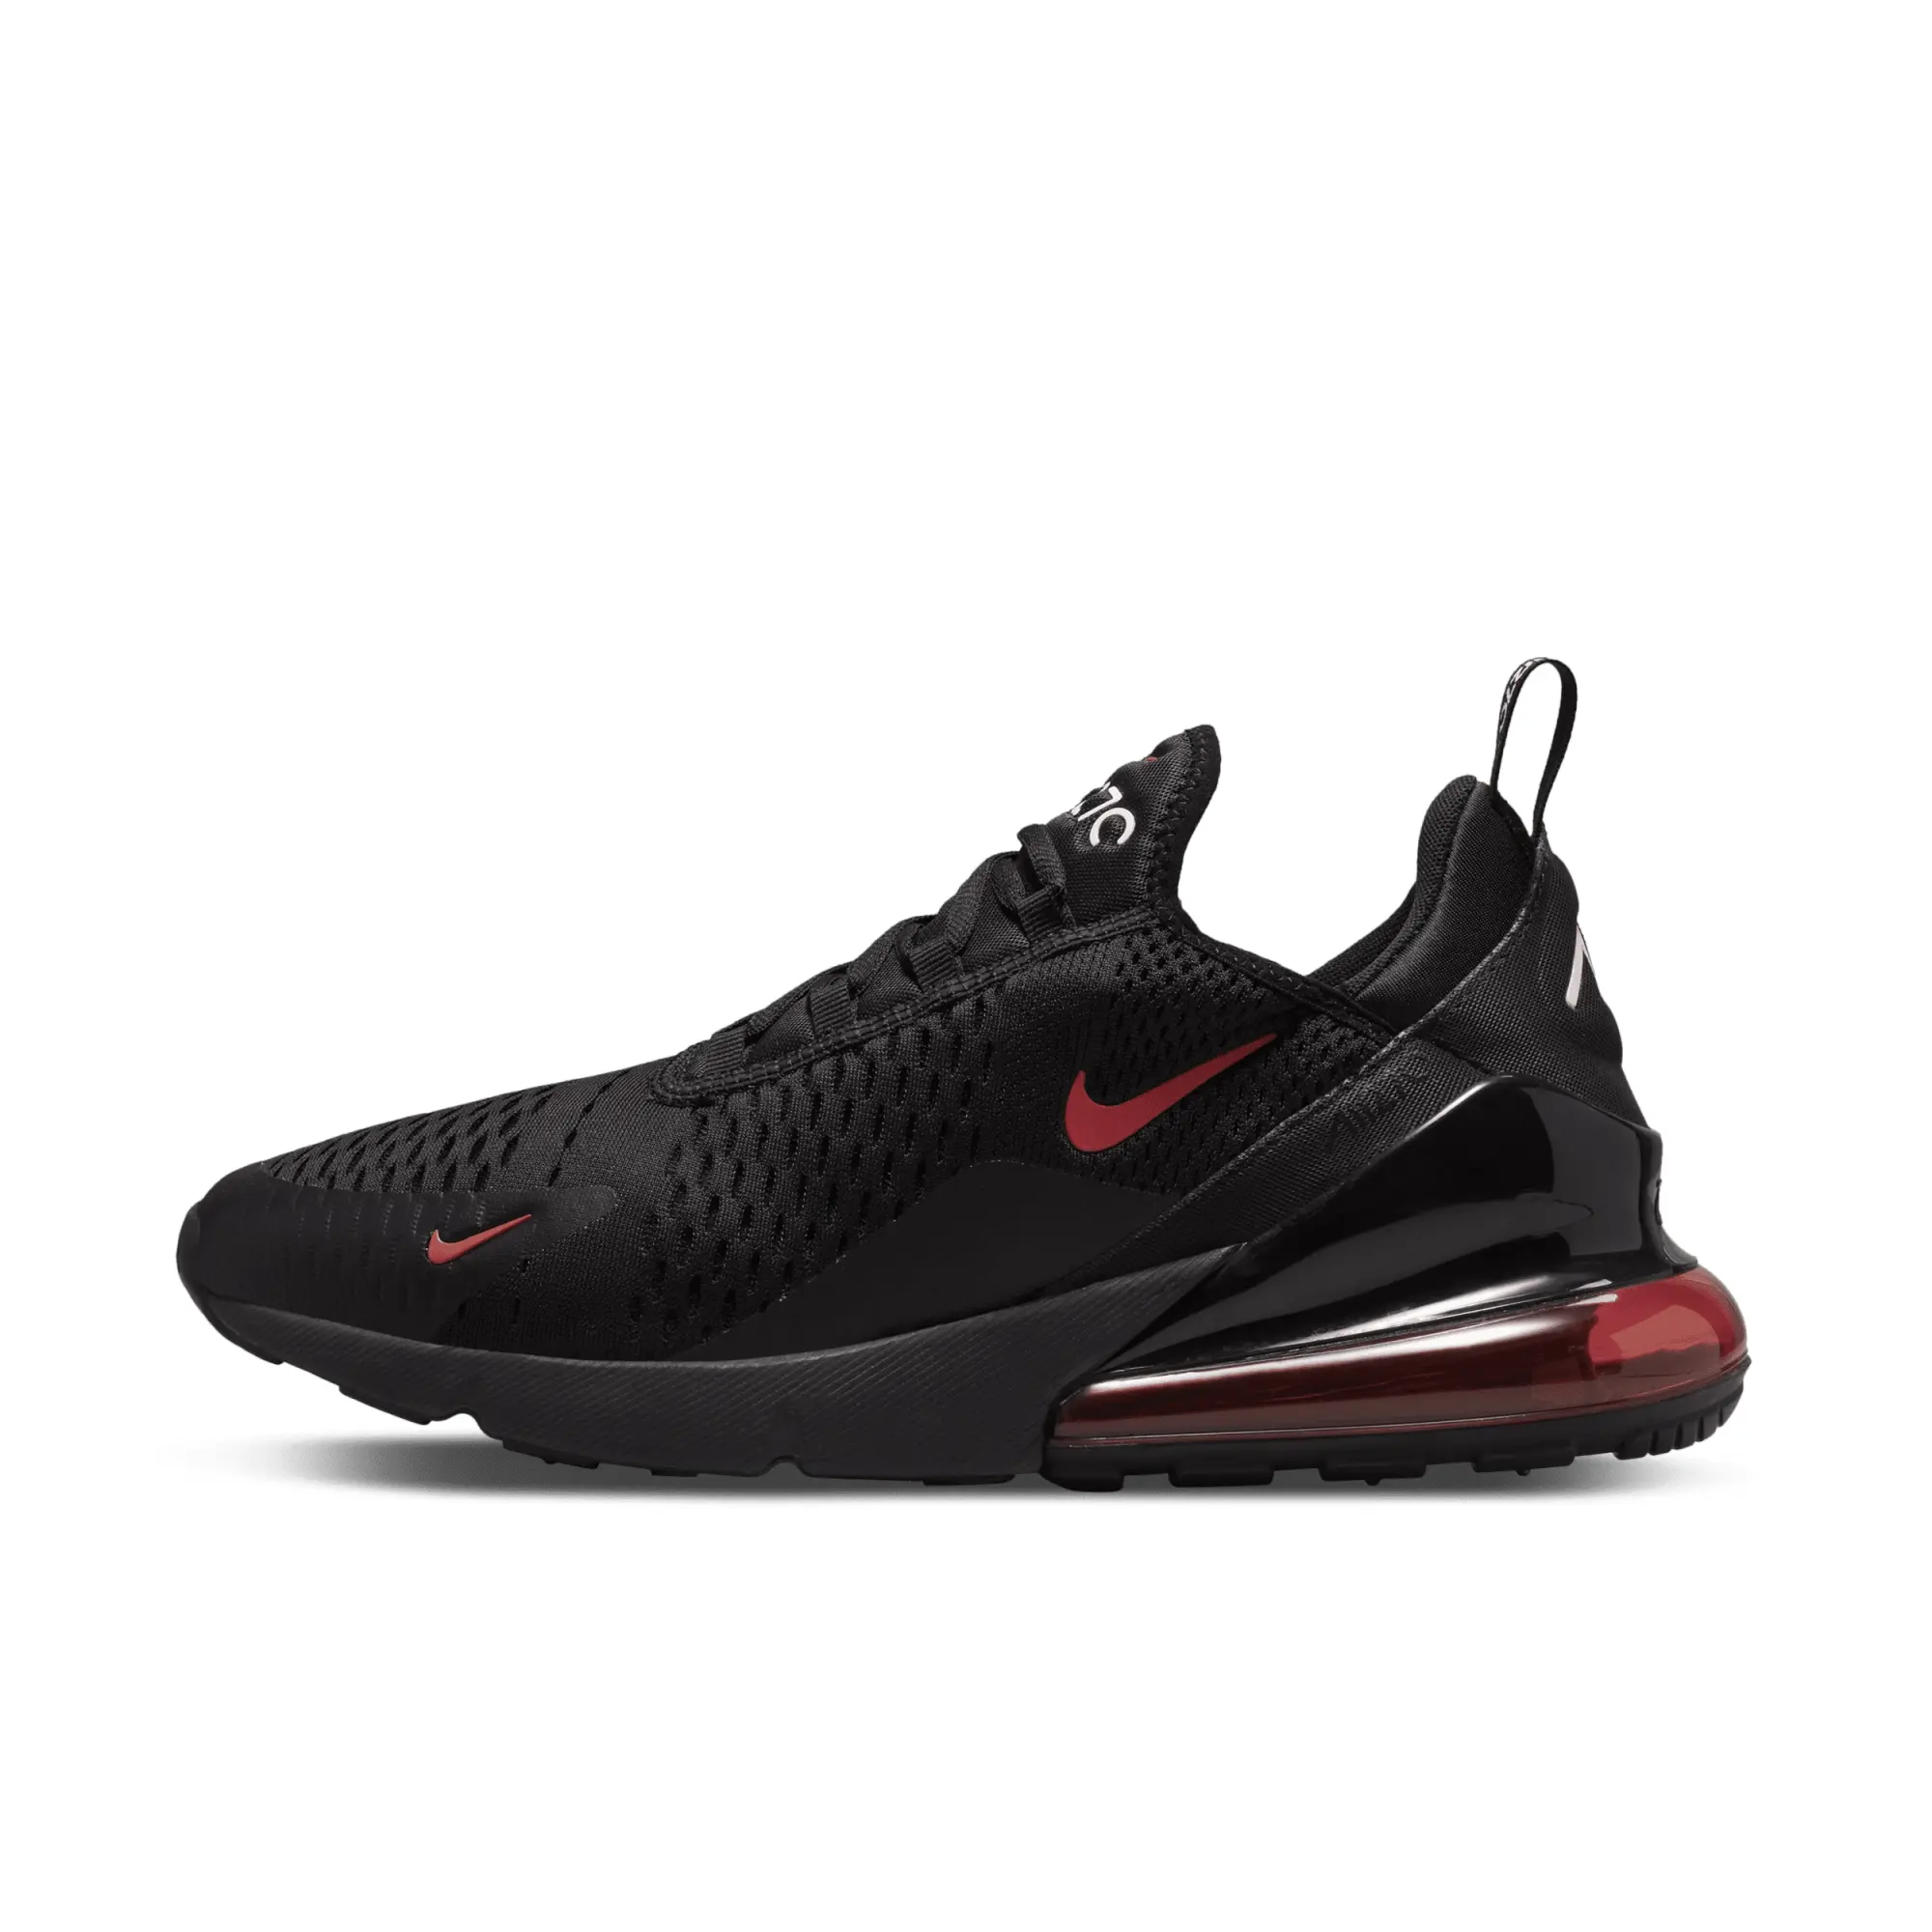 Nike Mens Air Max 270 Trainers, Black/White/University Red Mesh